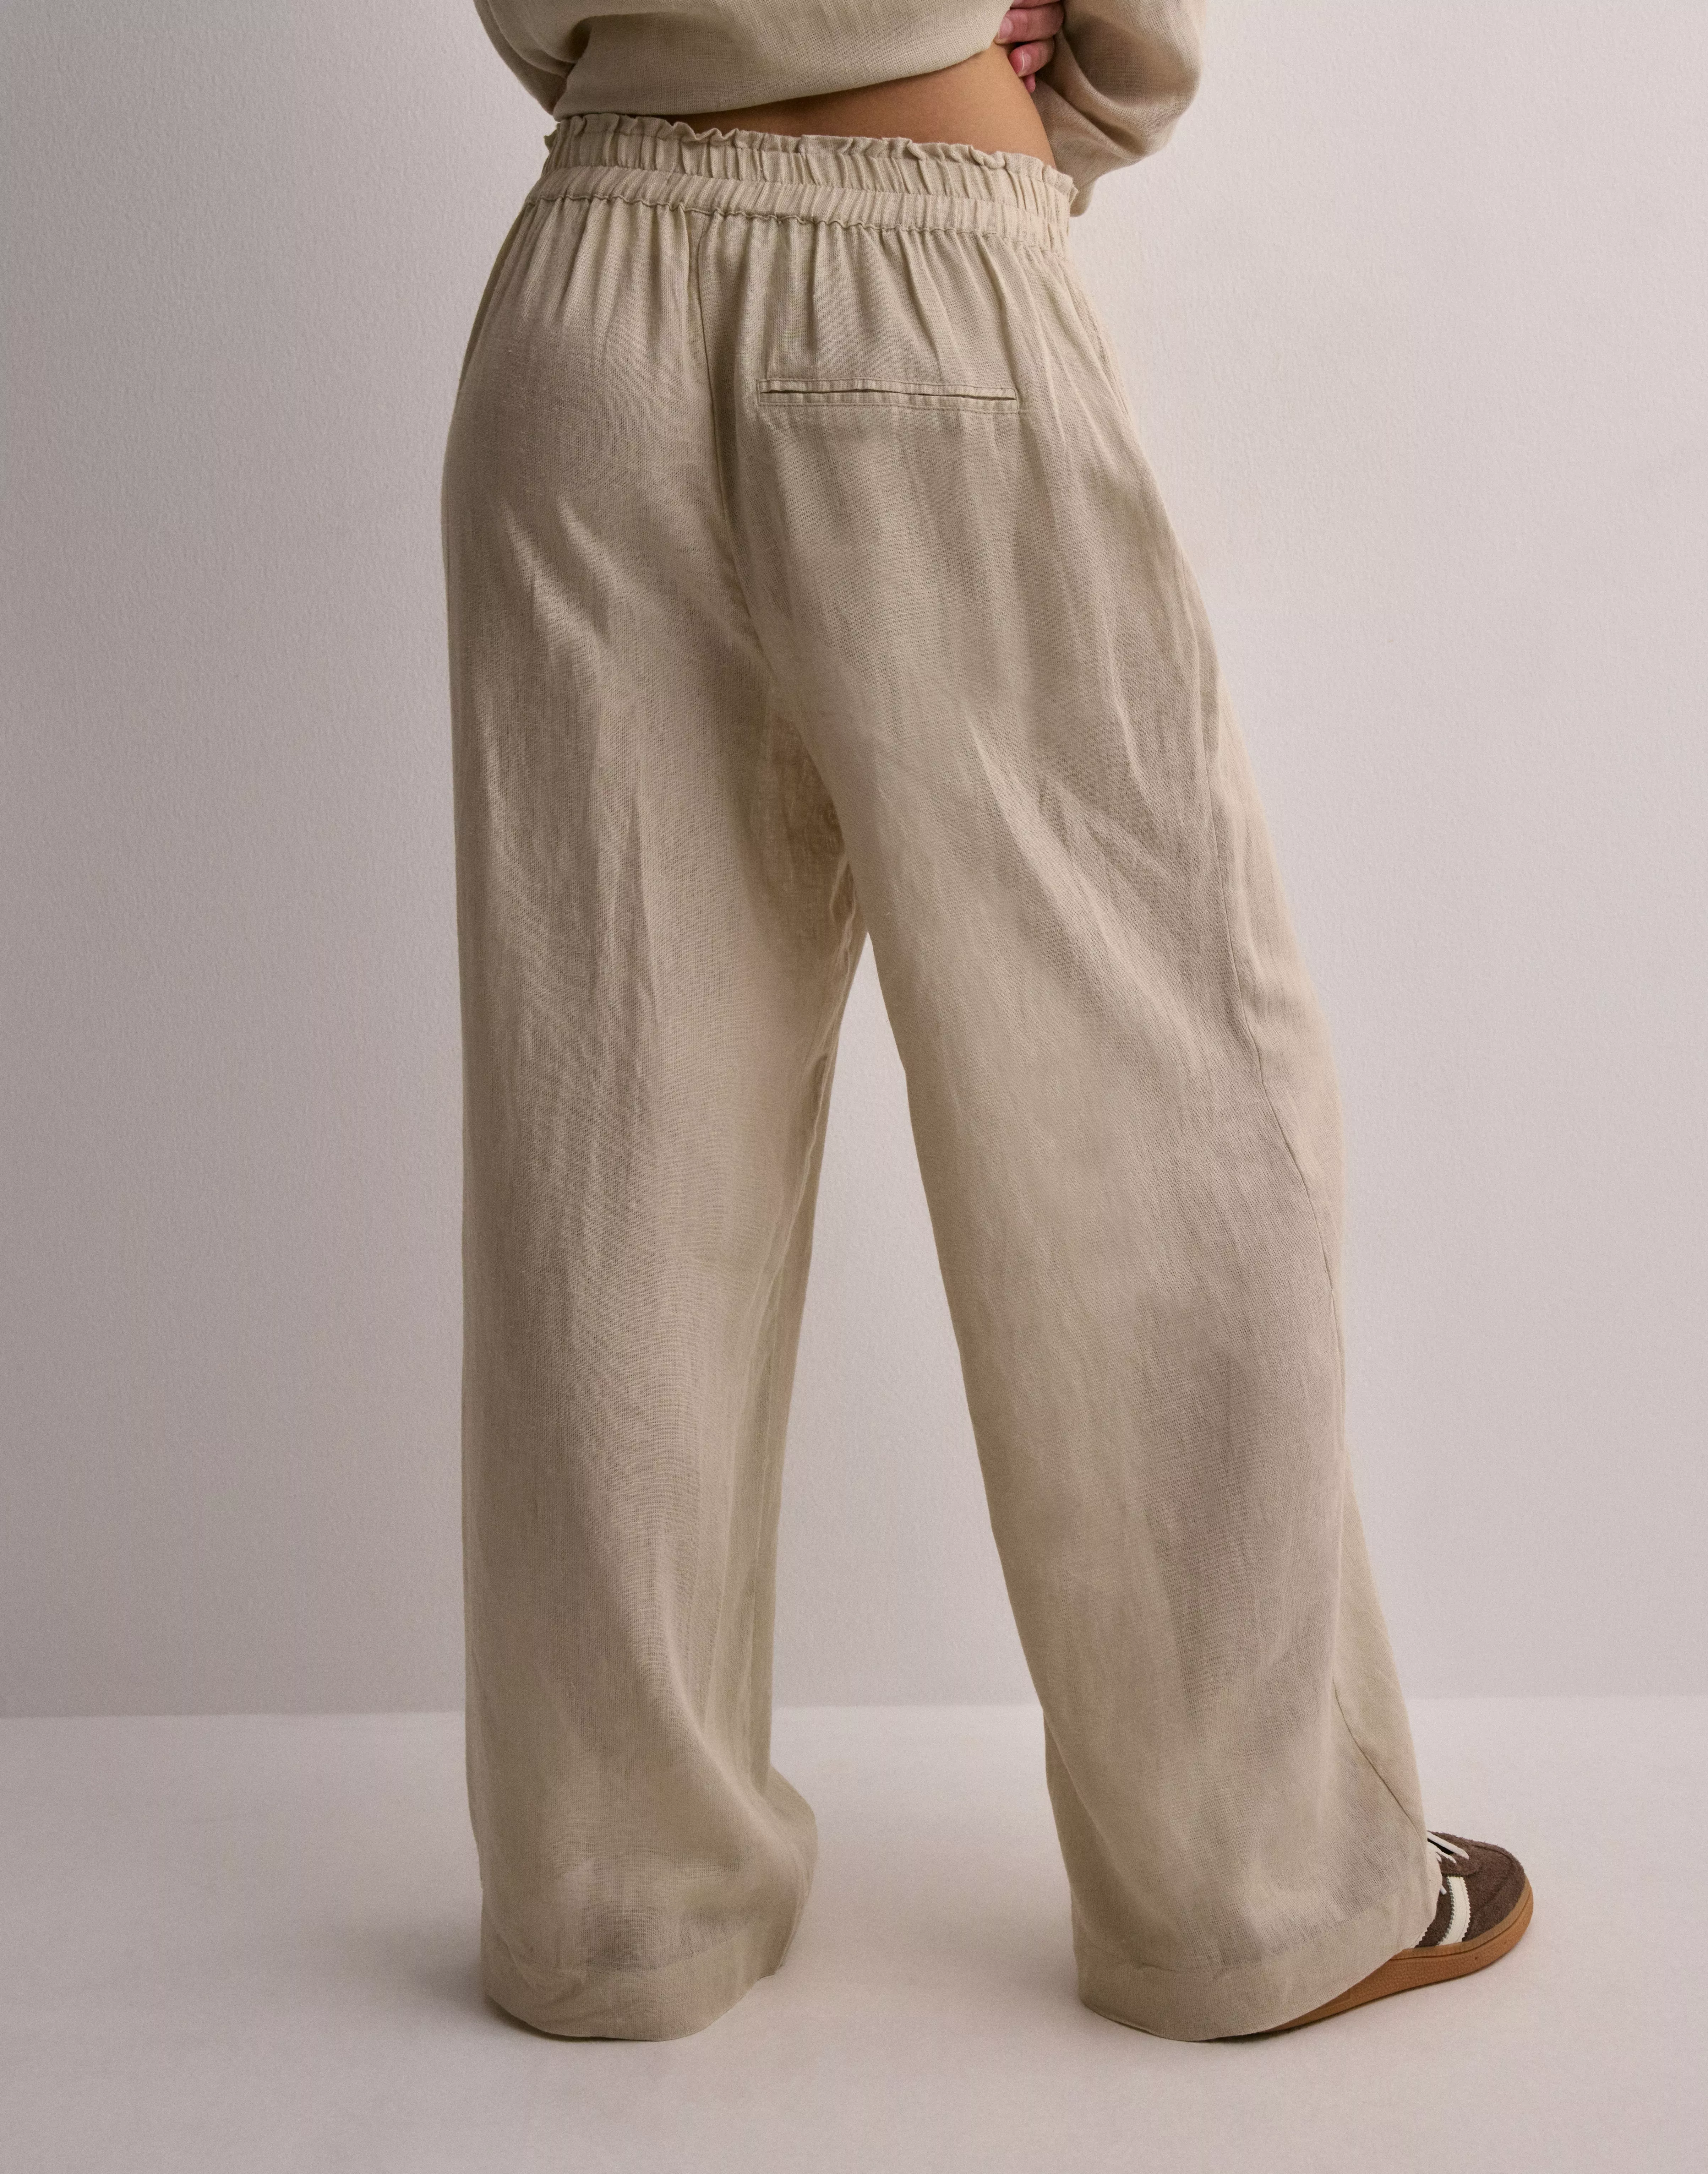 Linen Blend Crossover Pants, Natural for birds